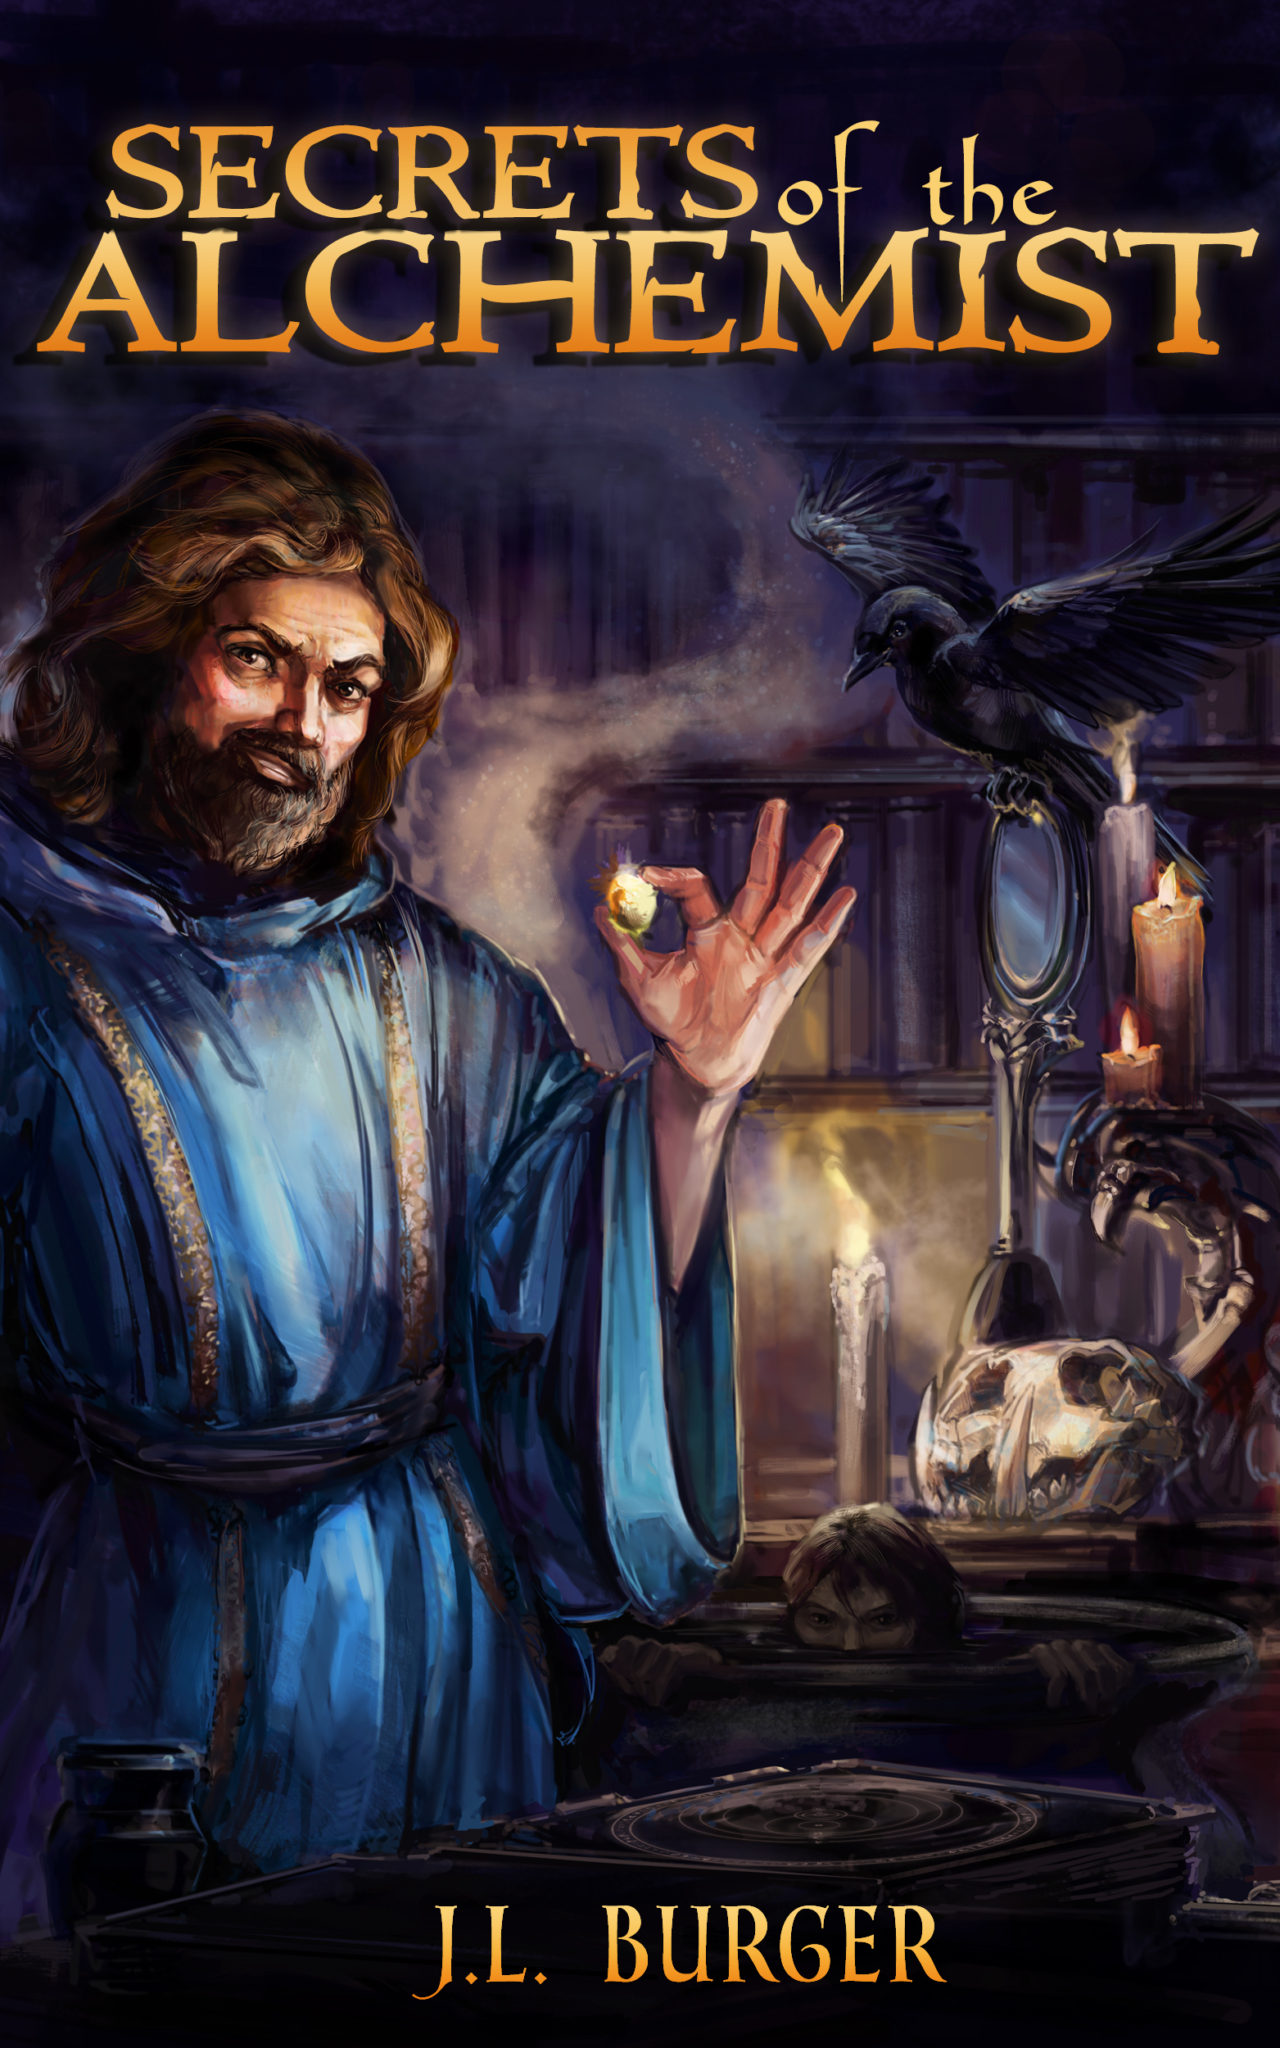 Secrets of the Alchemist by J.L. Burger